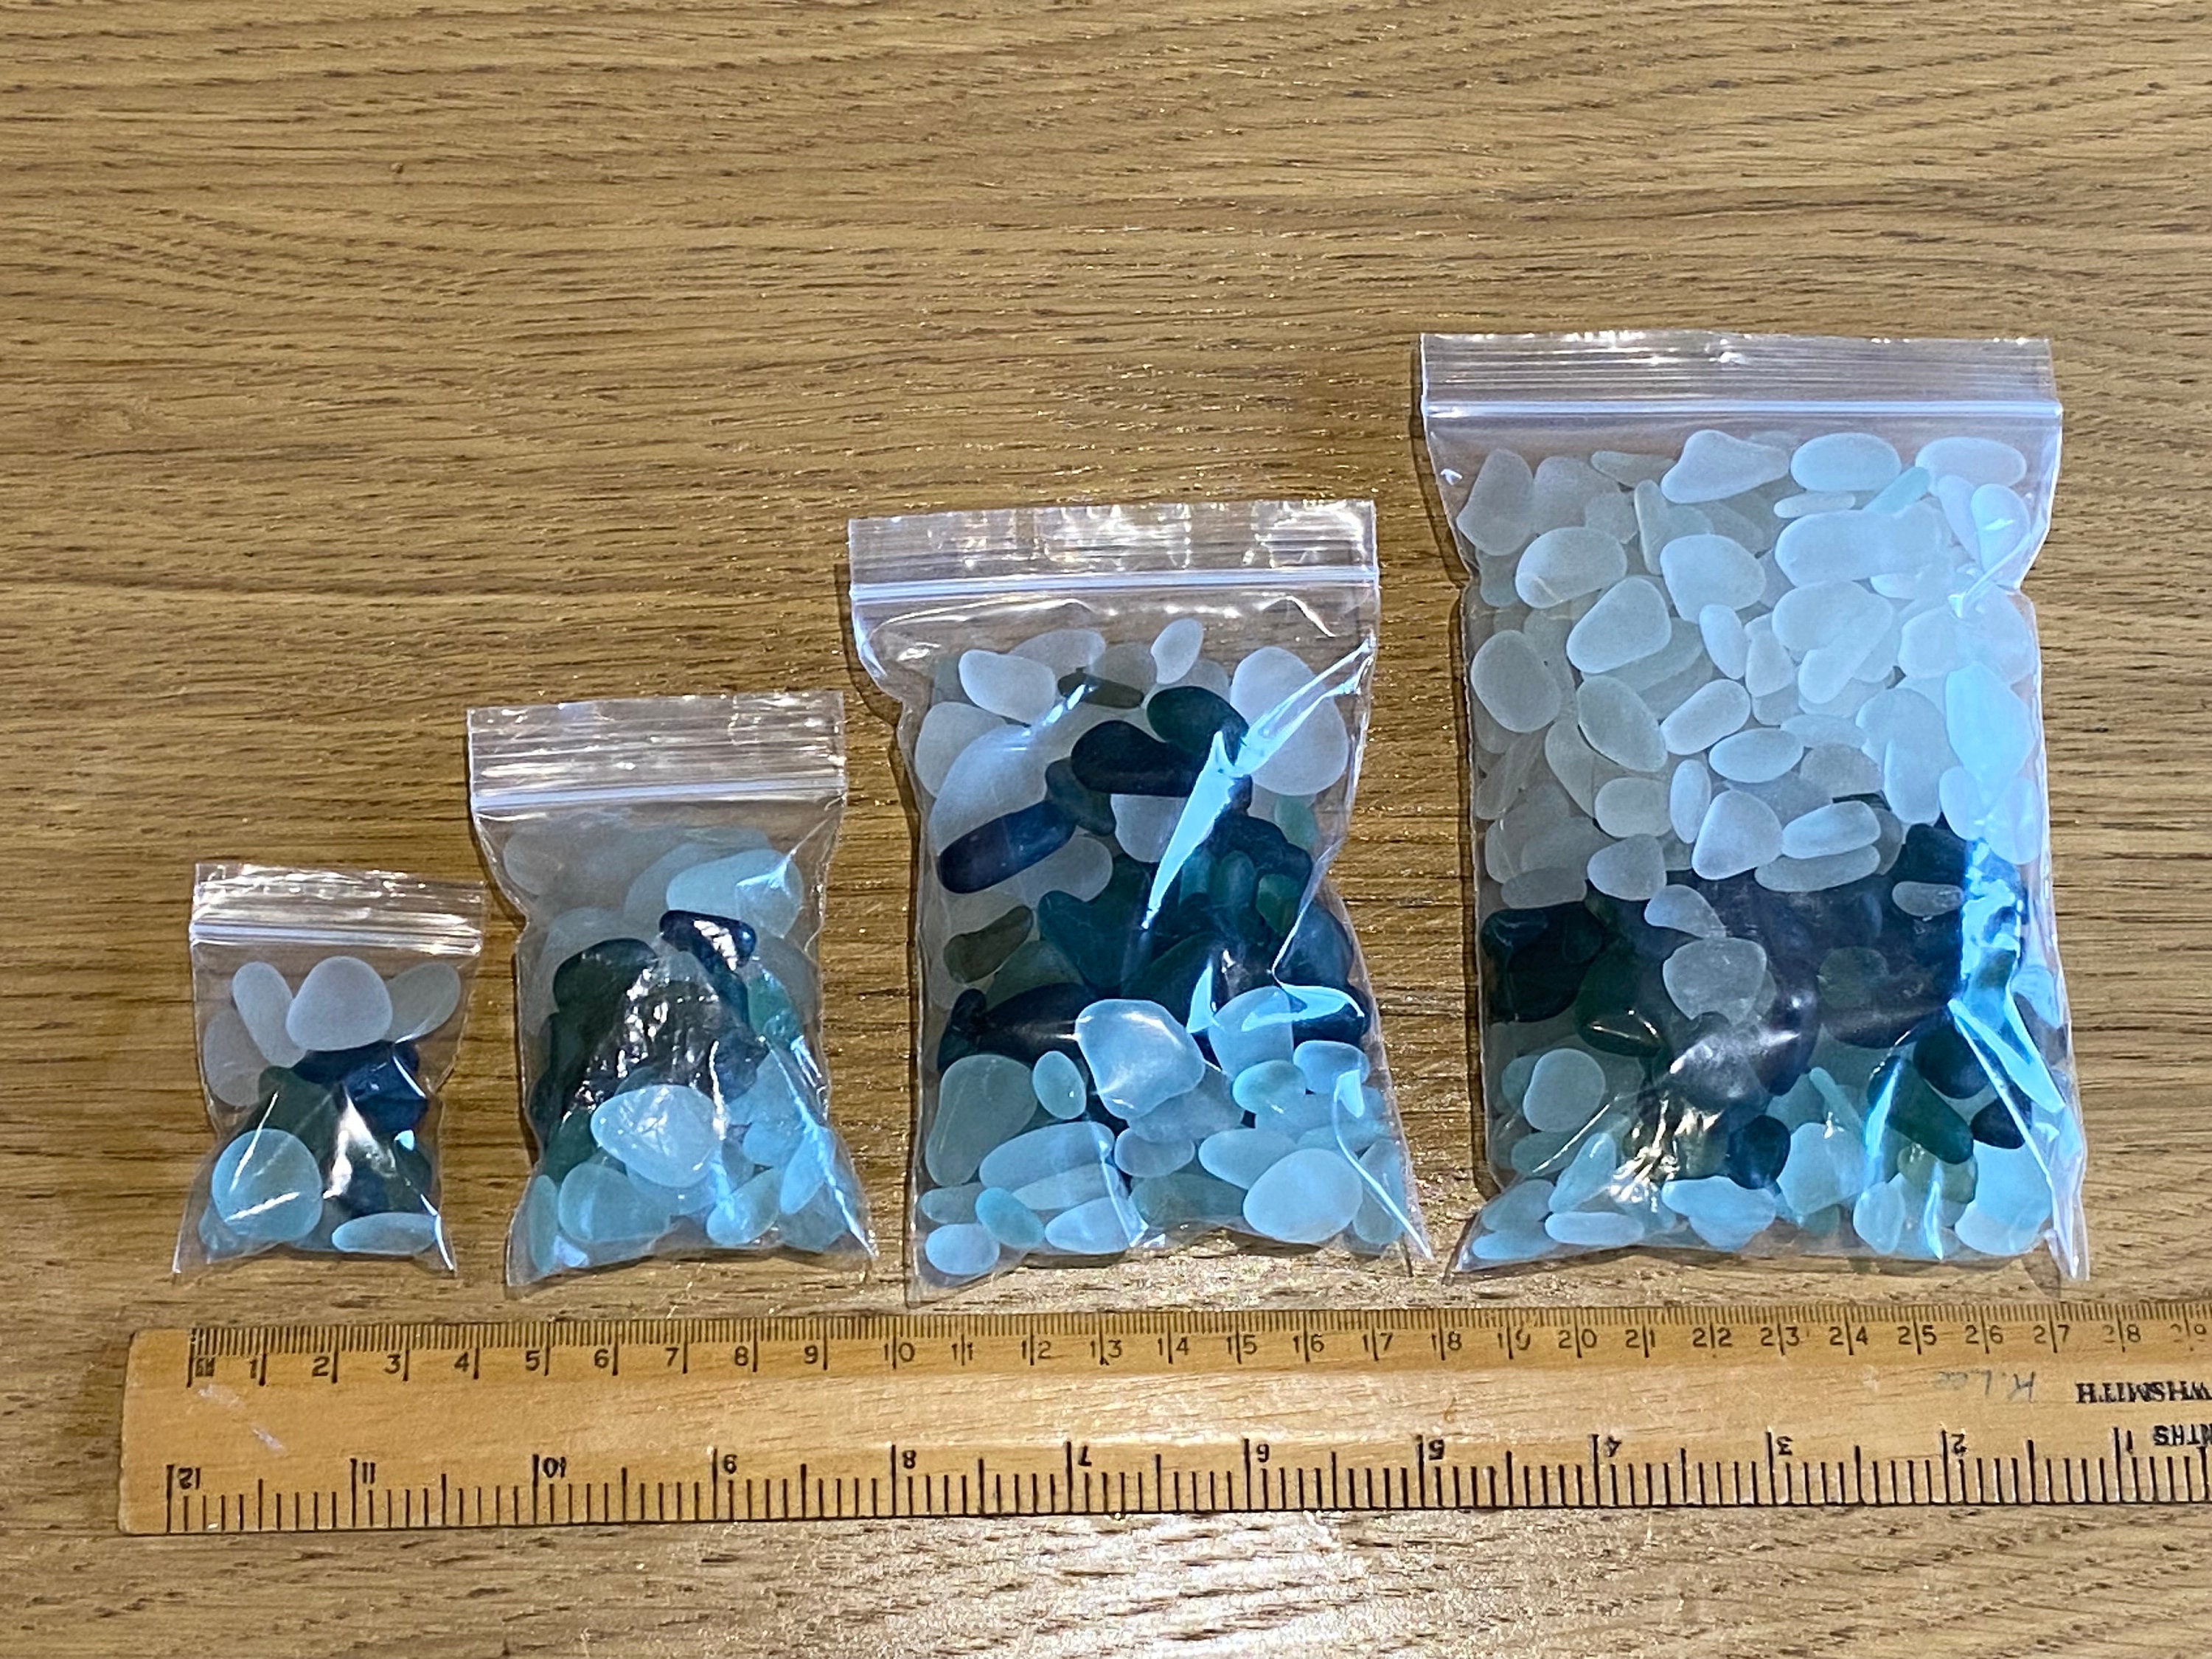 Vase Filler - Marbles for Vases - Blue Accent Gems, Glass Pebbles 10 oz.  Bags - 9 Bags 